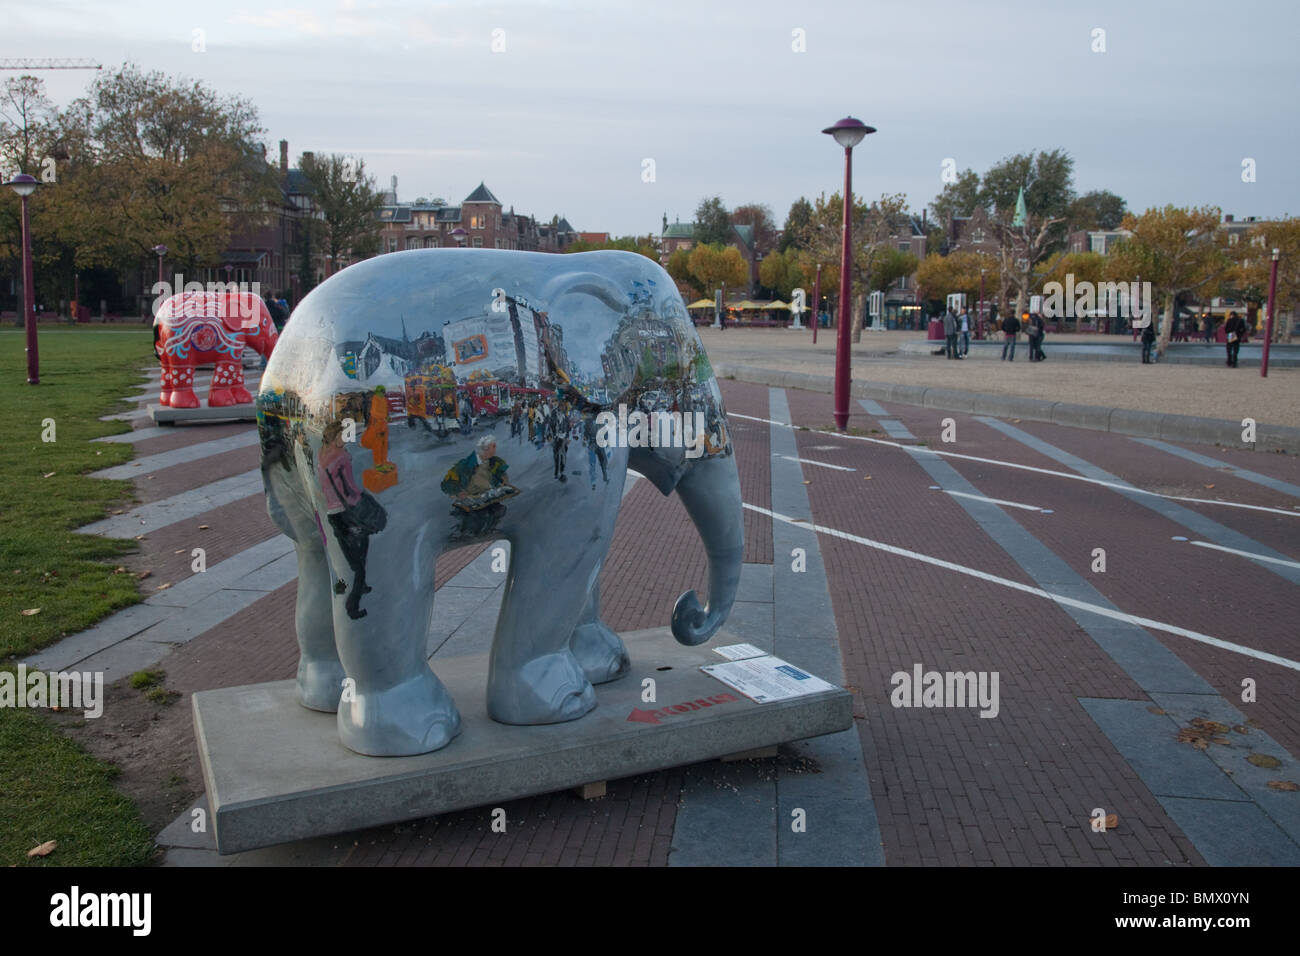 Elephant amsterdam elephant parade hi-res stock photography and images -  Alamy